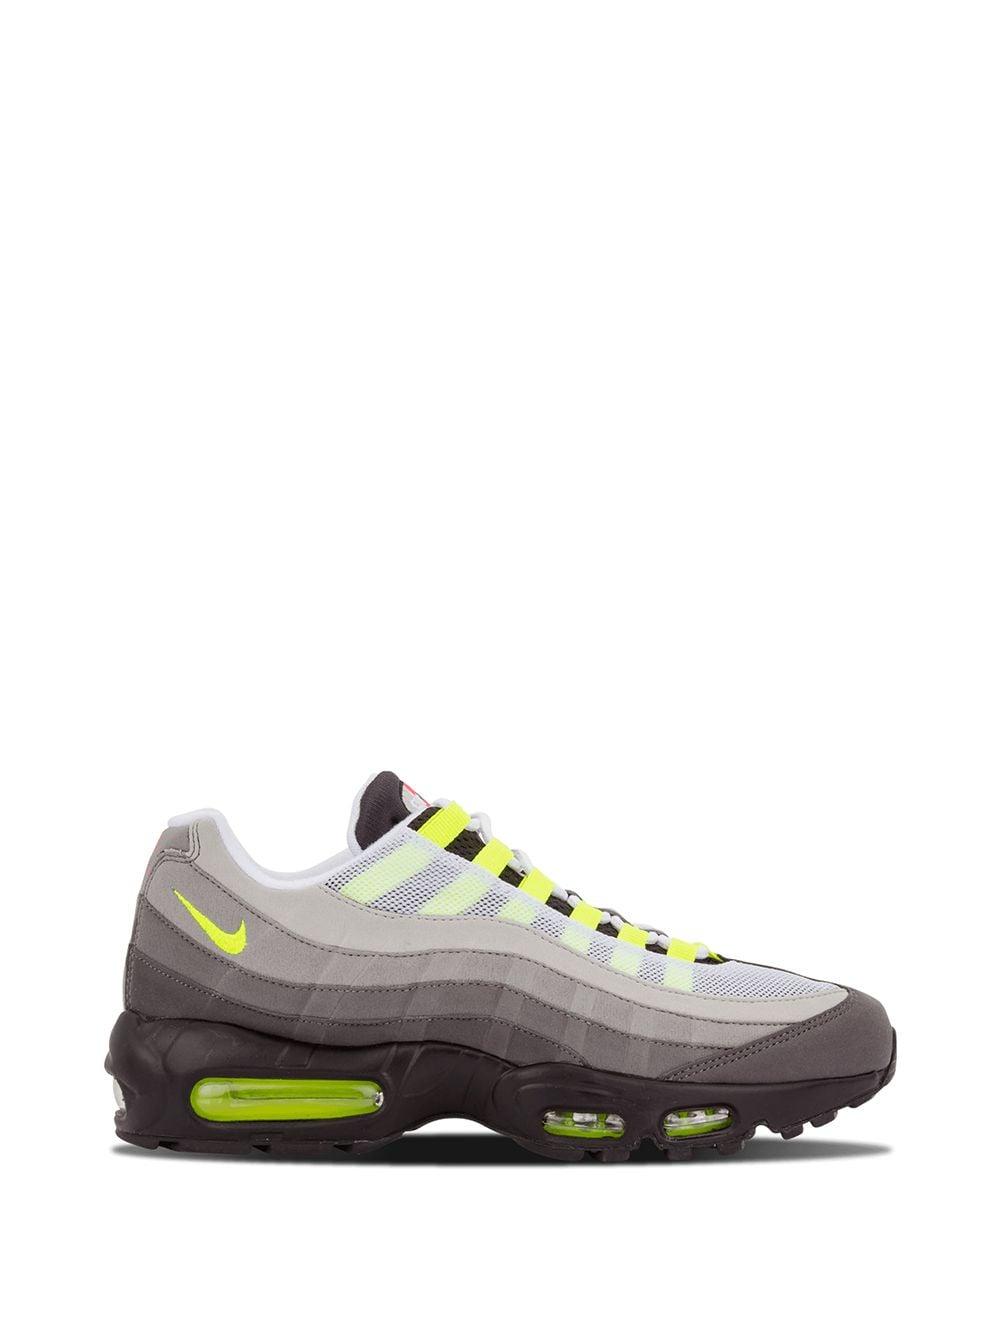 Nike Air Max 95 Og Qs Sneakers in Grey (Gray) for Men - Lyst